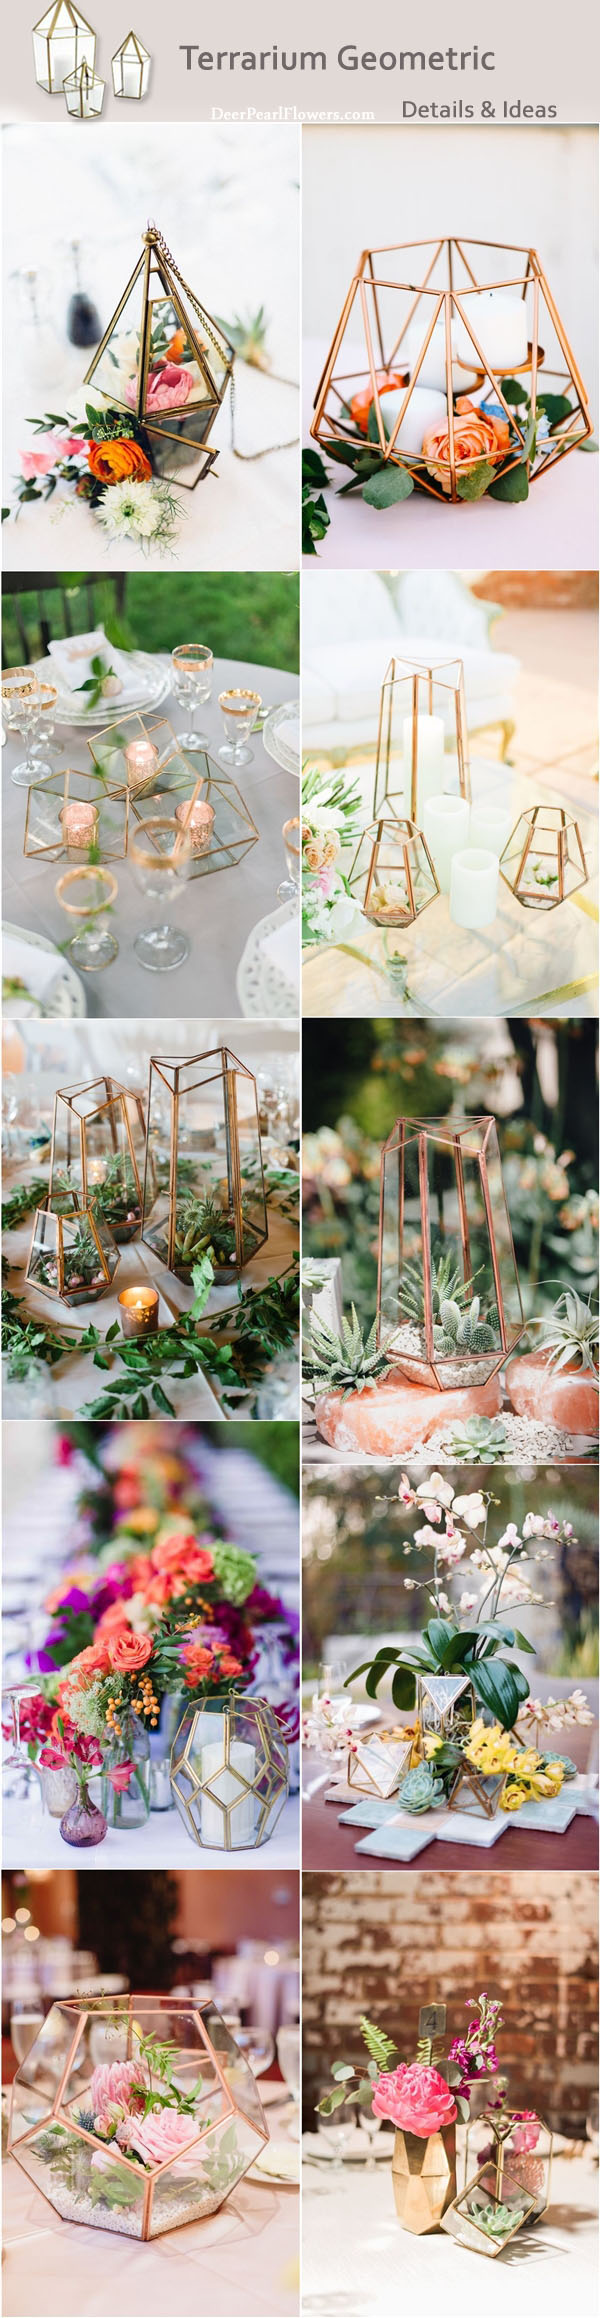 Modern wedding ideas - Terrarium geometric wedding centerpieces